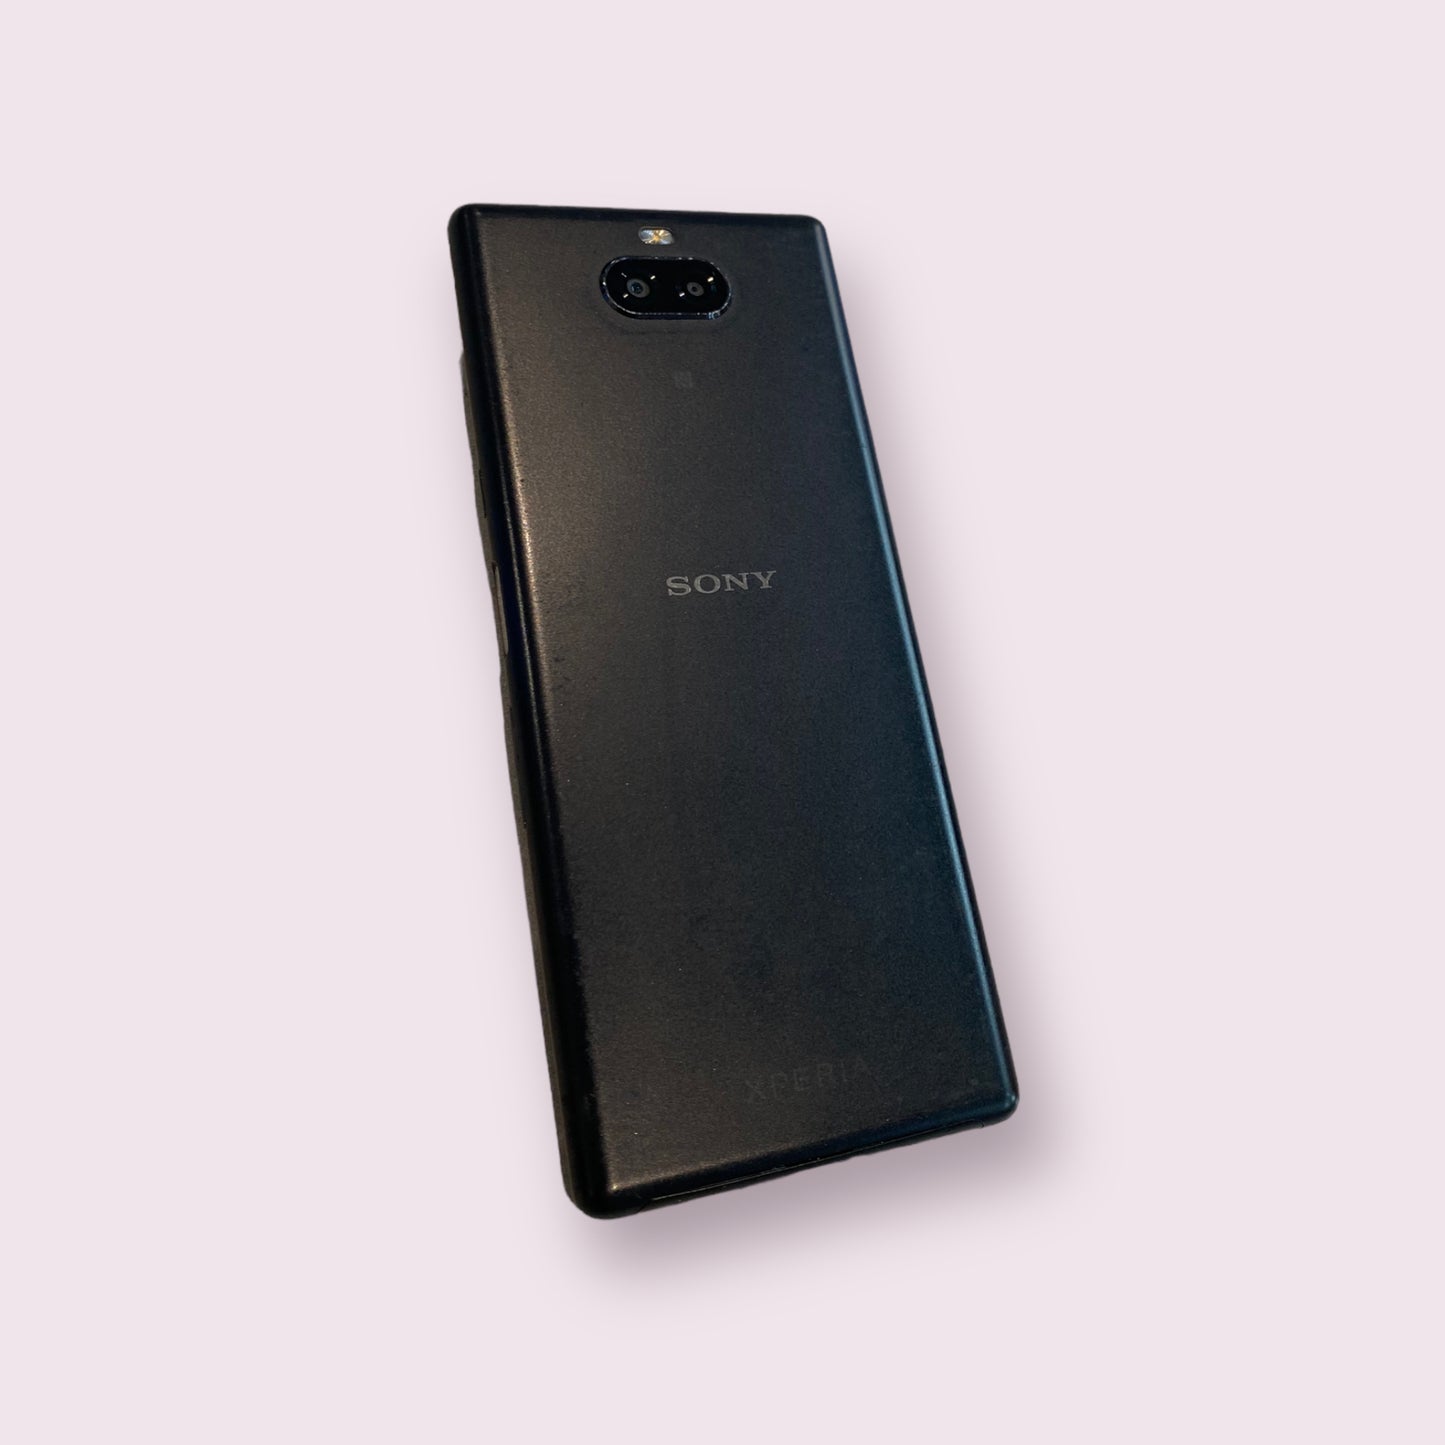 Sony Xperia 10 64GB I3113 Android Smartphone Black - EE - Grade B